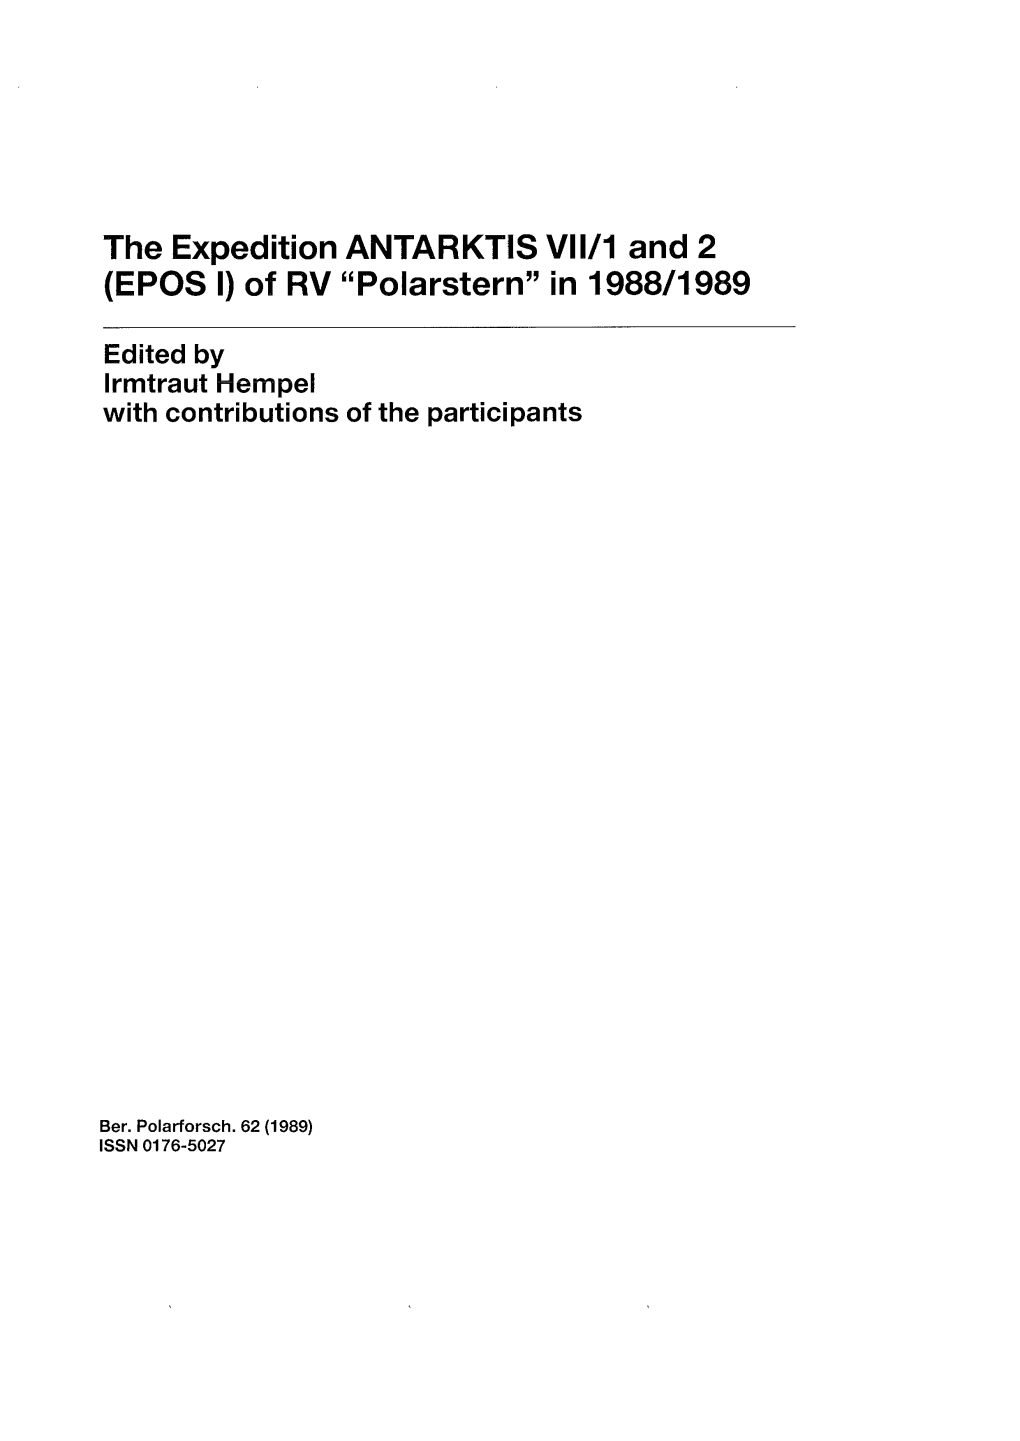 The Expedition ANTARKTIS VIV1 and 2 (EPOS I) of RV "Polarstern" in 198811989